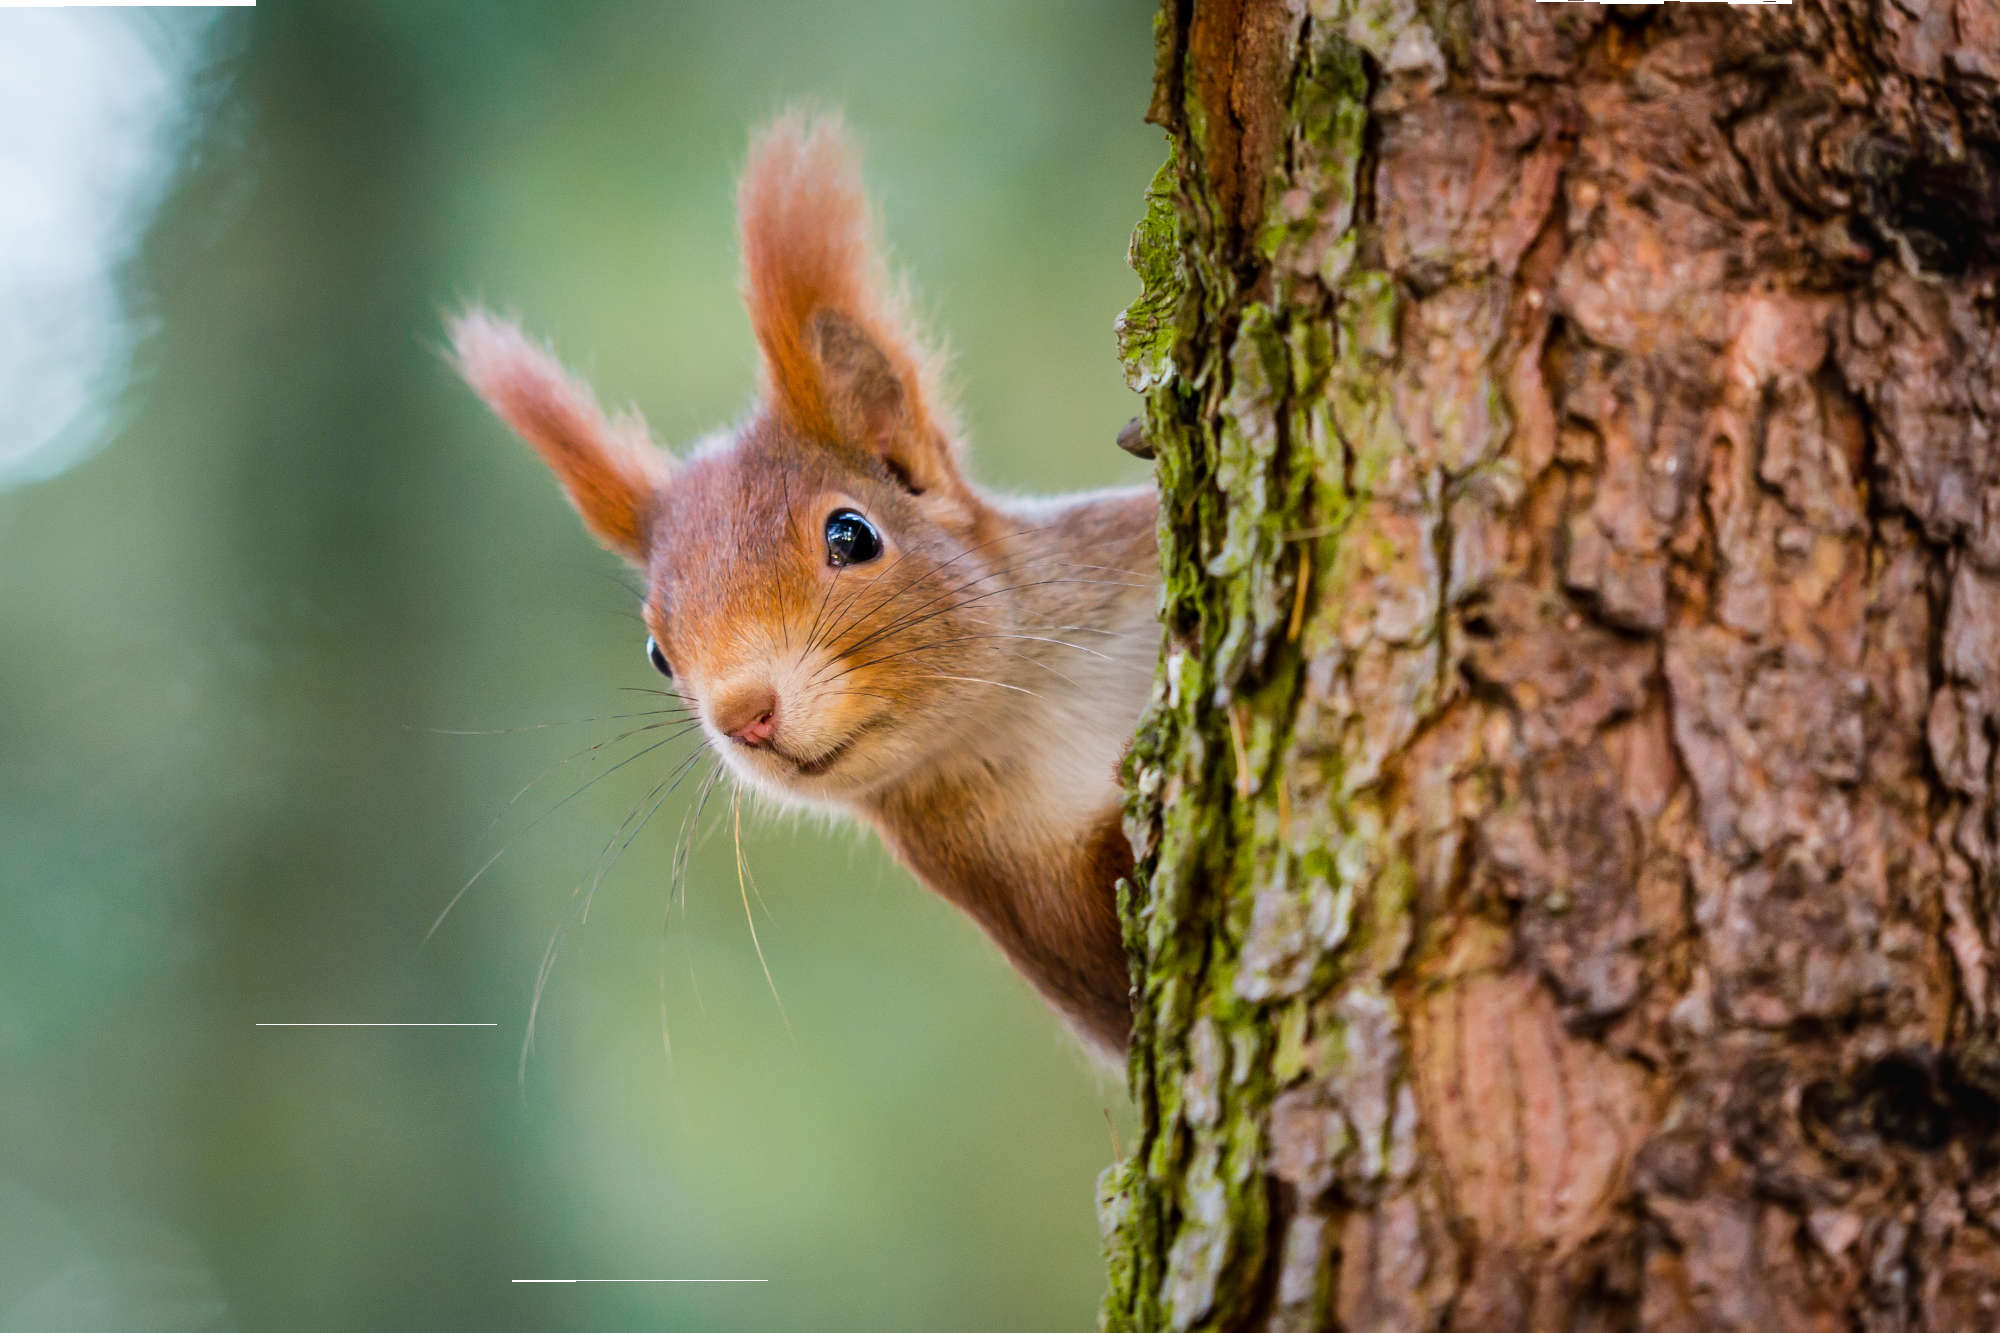 Red squirrel peeking round a tree trunk